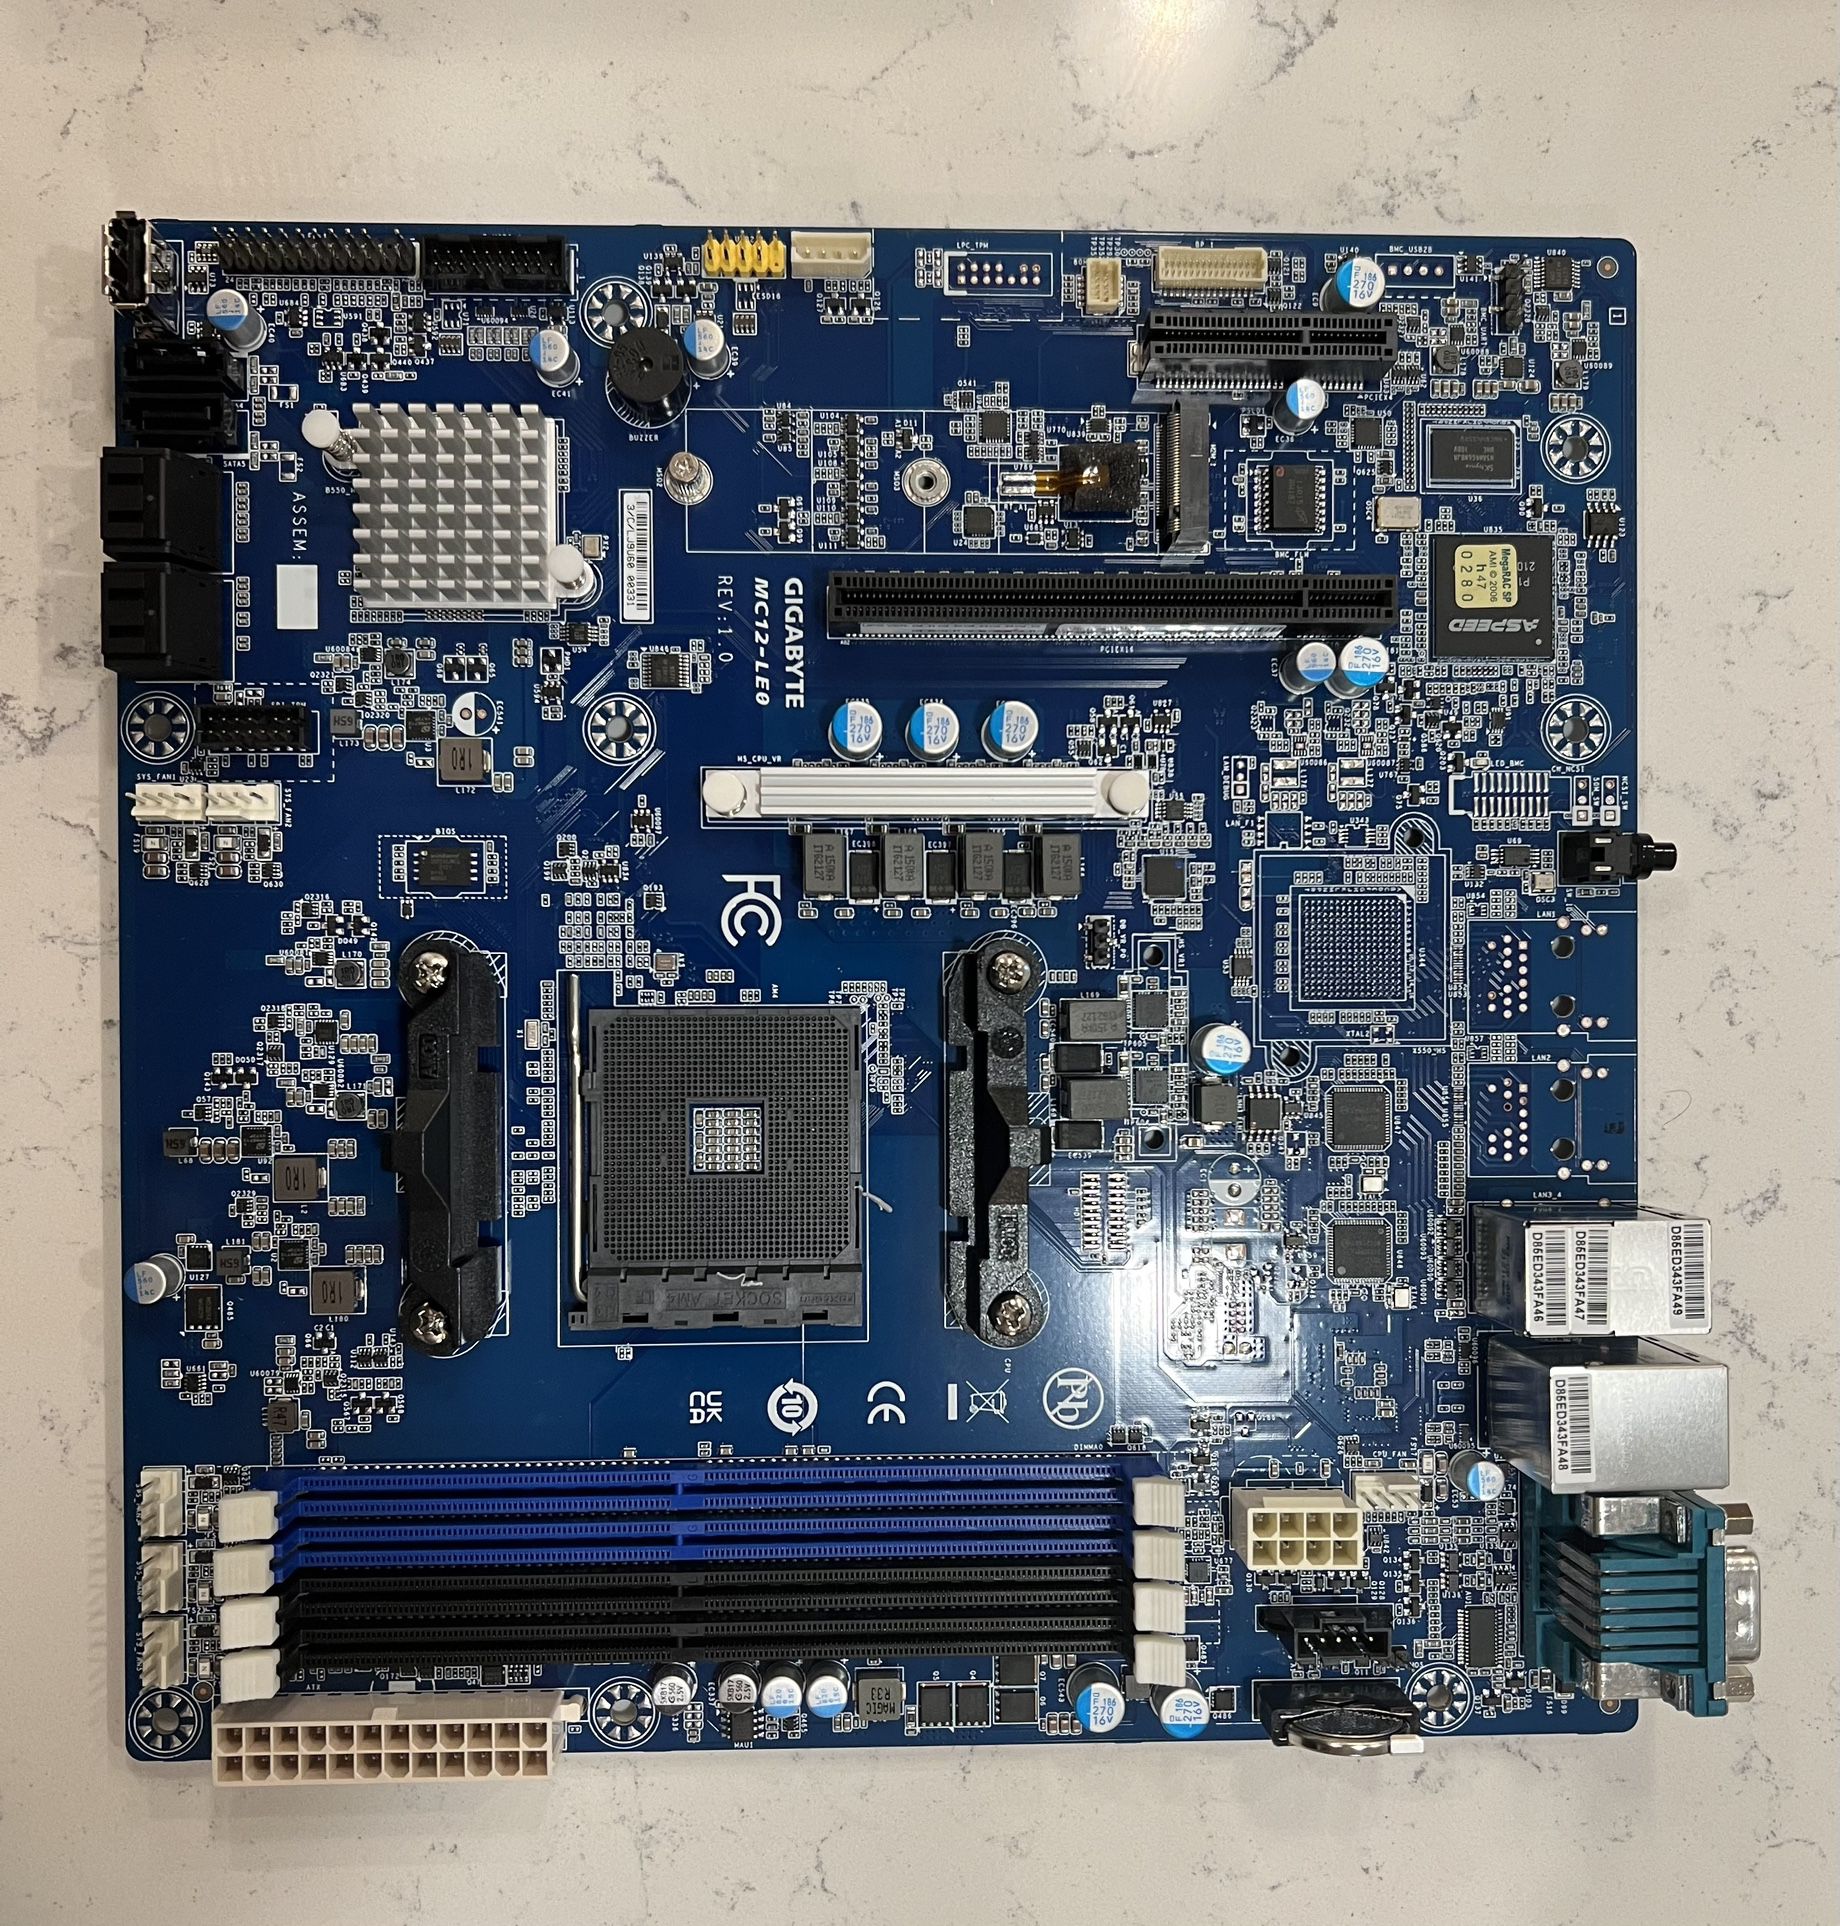 Gigabyte MC12-LE0 uATX AMD Ryzen AM4 Server/Workstation Motherboard 